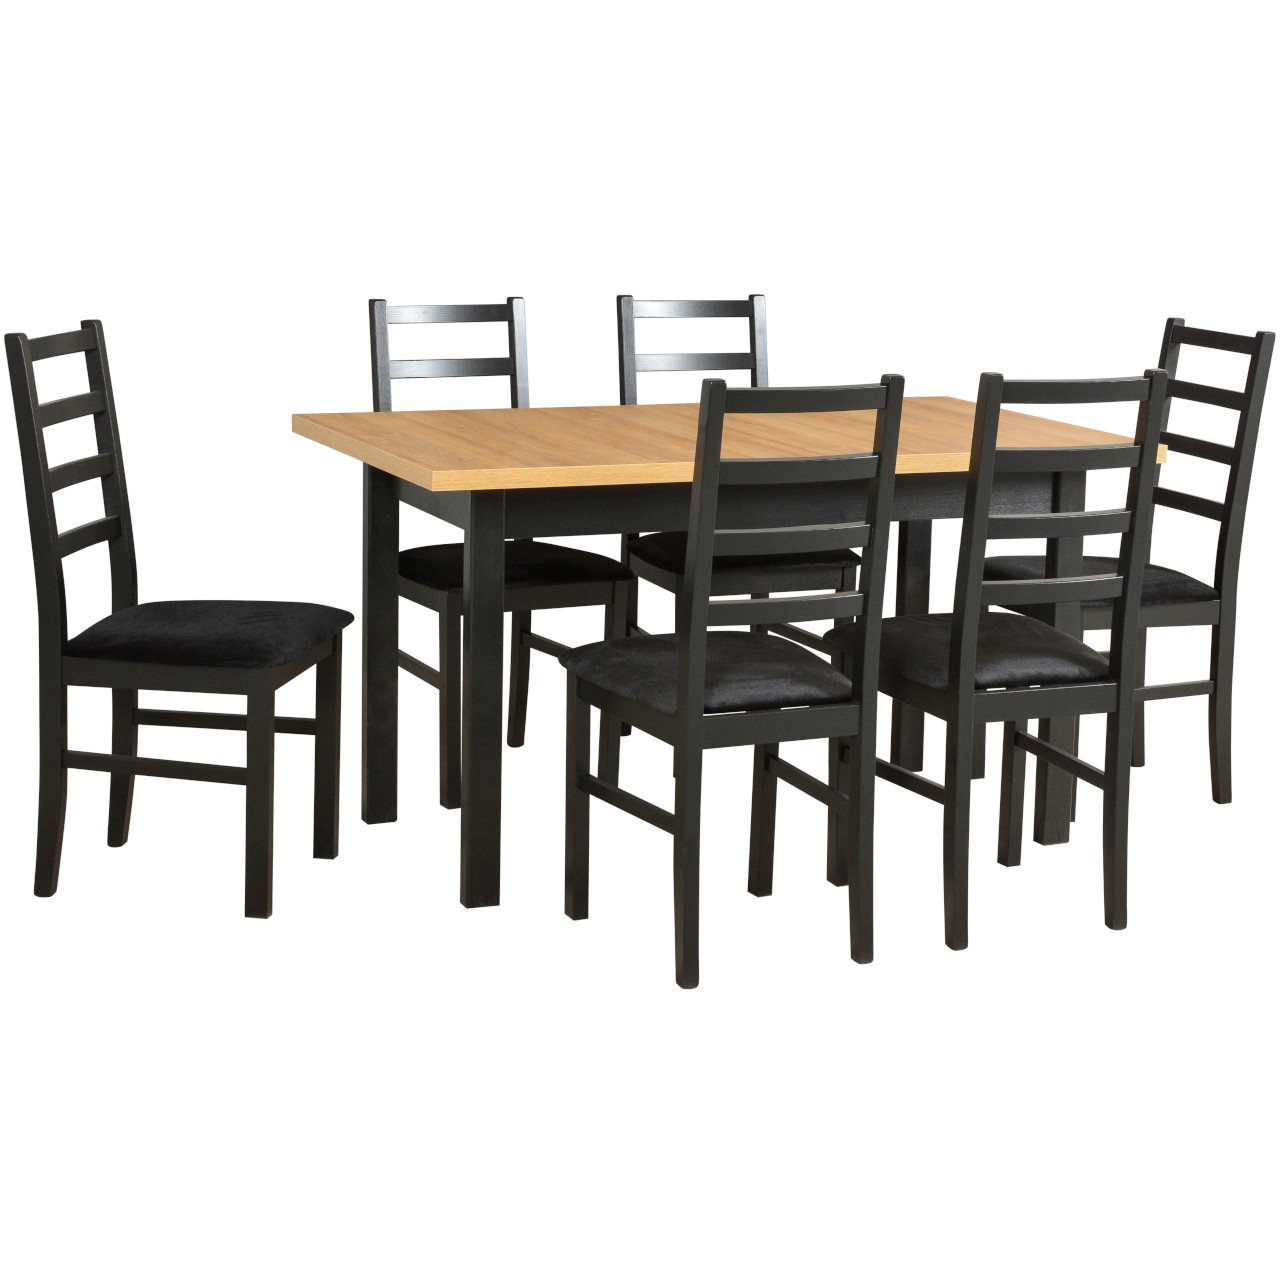 Table MODENA 1 XL grandson laminate / black + chairs NILO 8 (6 pcs.) black / 29B